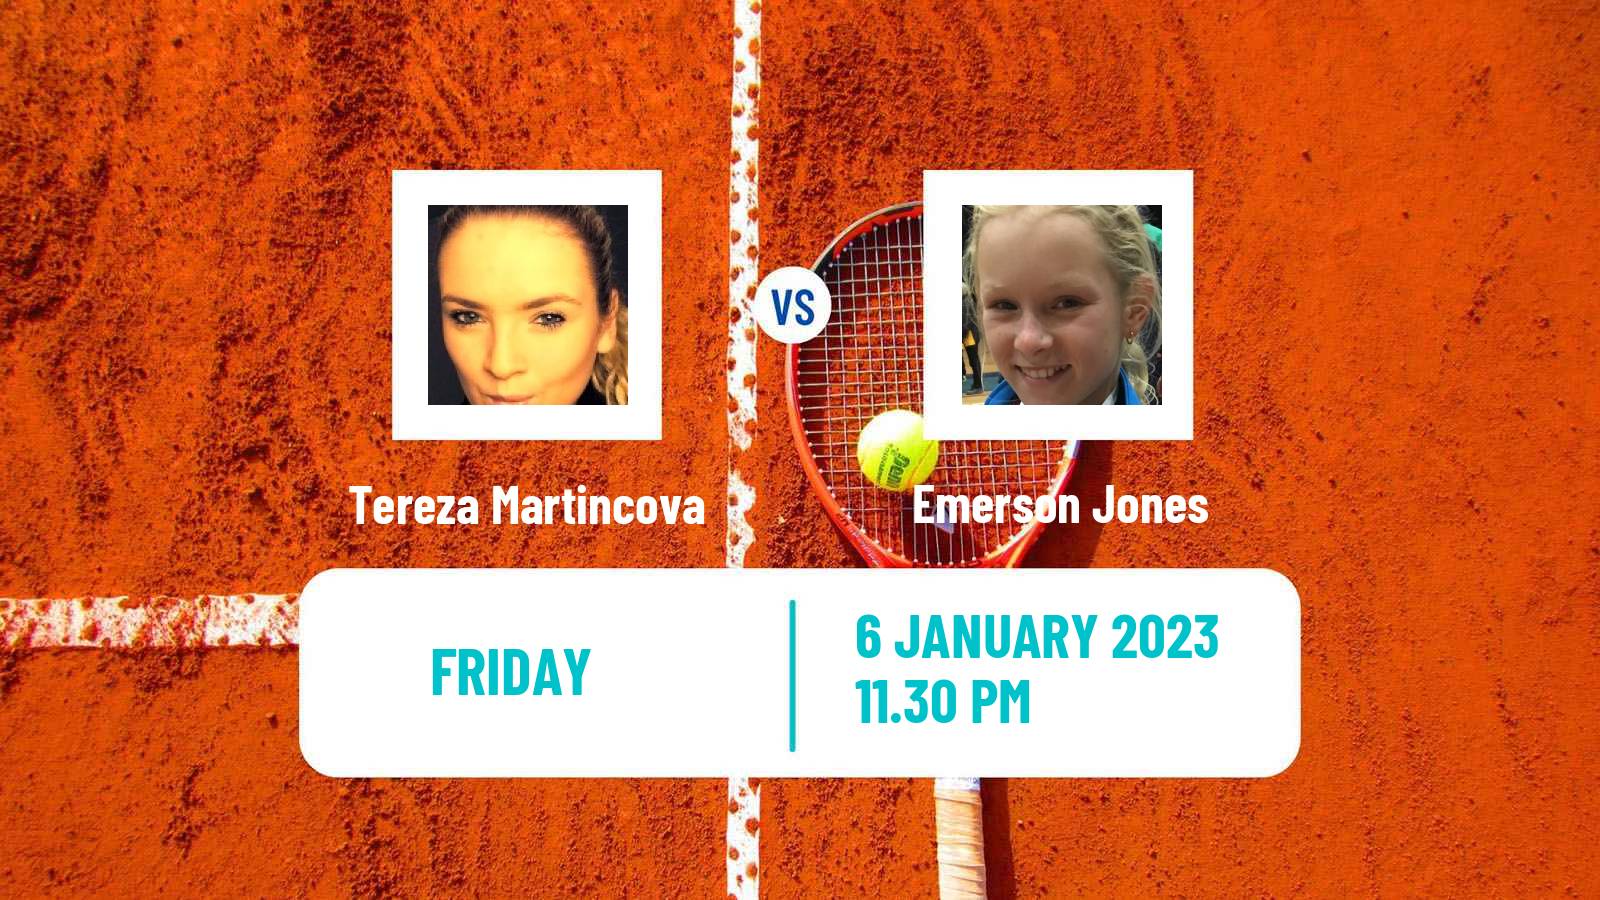 Tennis WTA Hobart Tereza Martincova - Emerson Jones